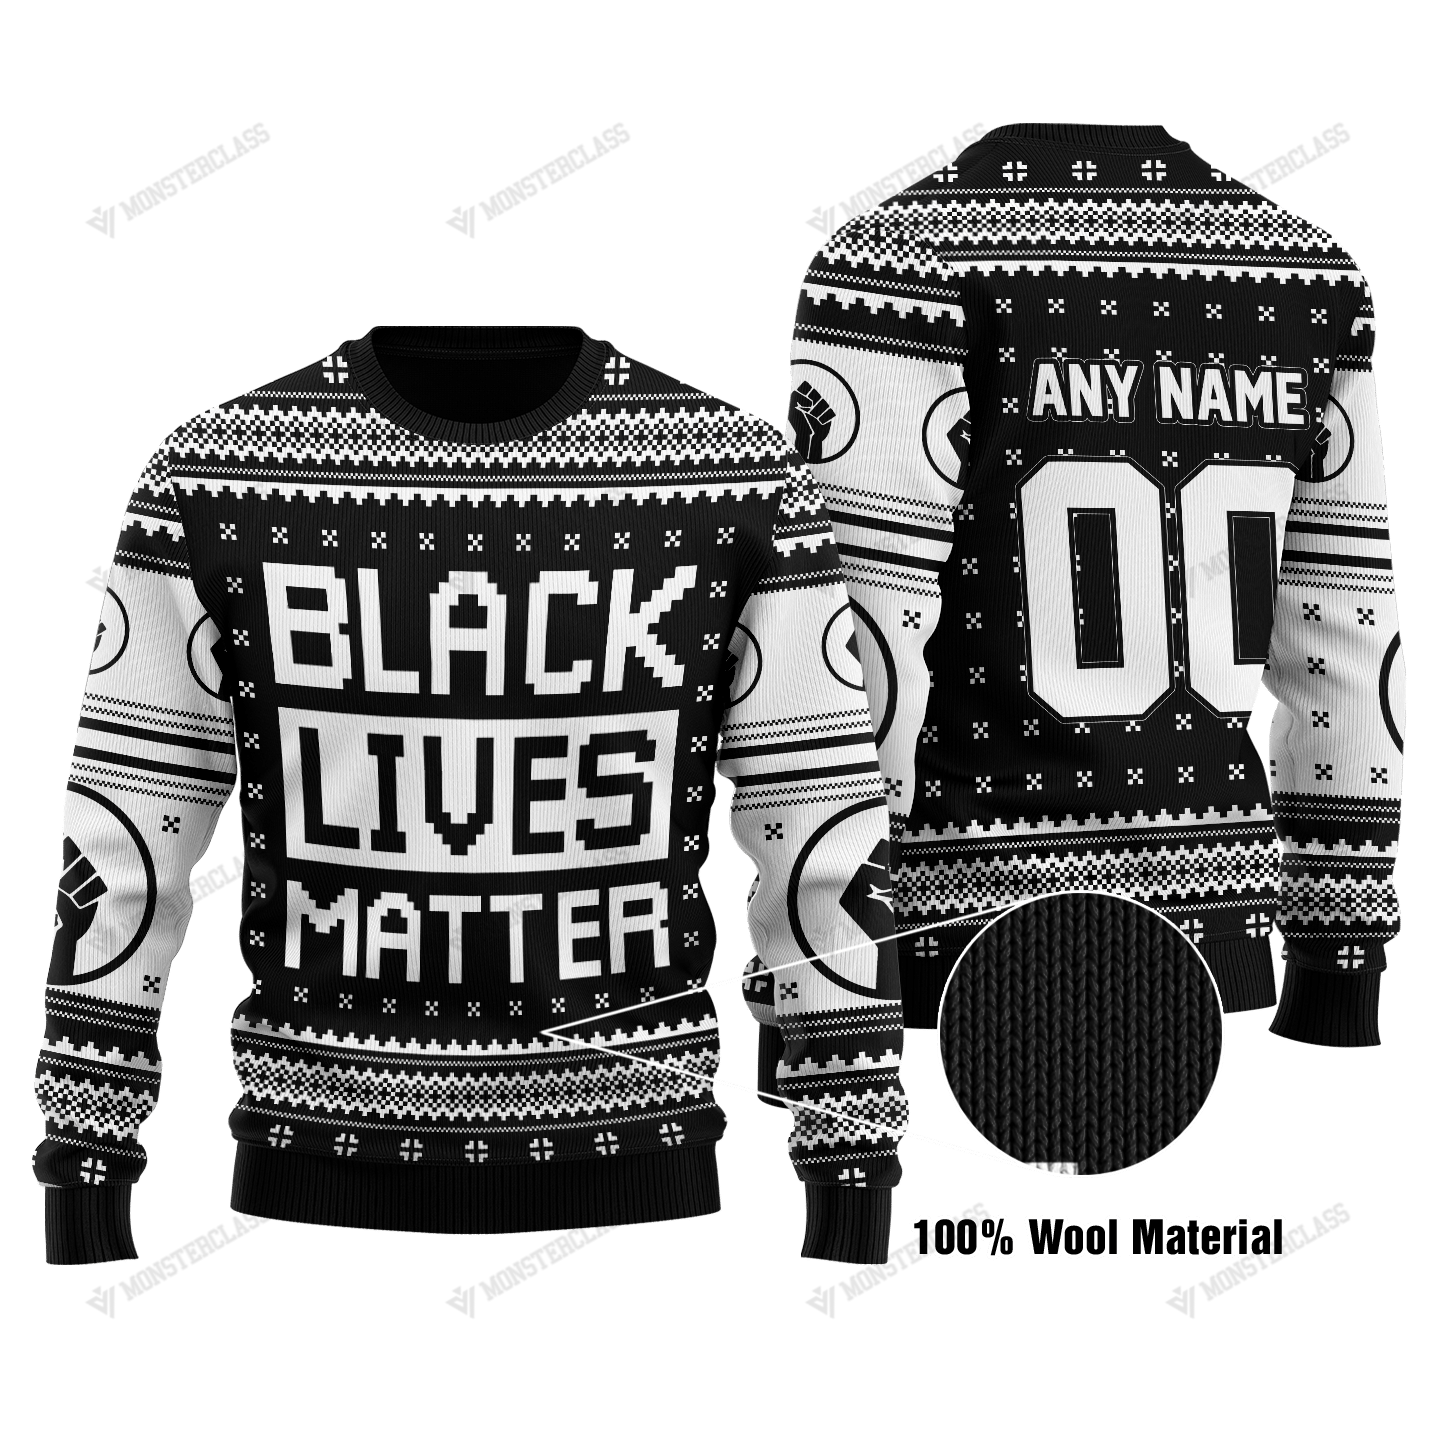 Personalized Black Lives Matter custom christmas sweater